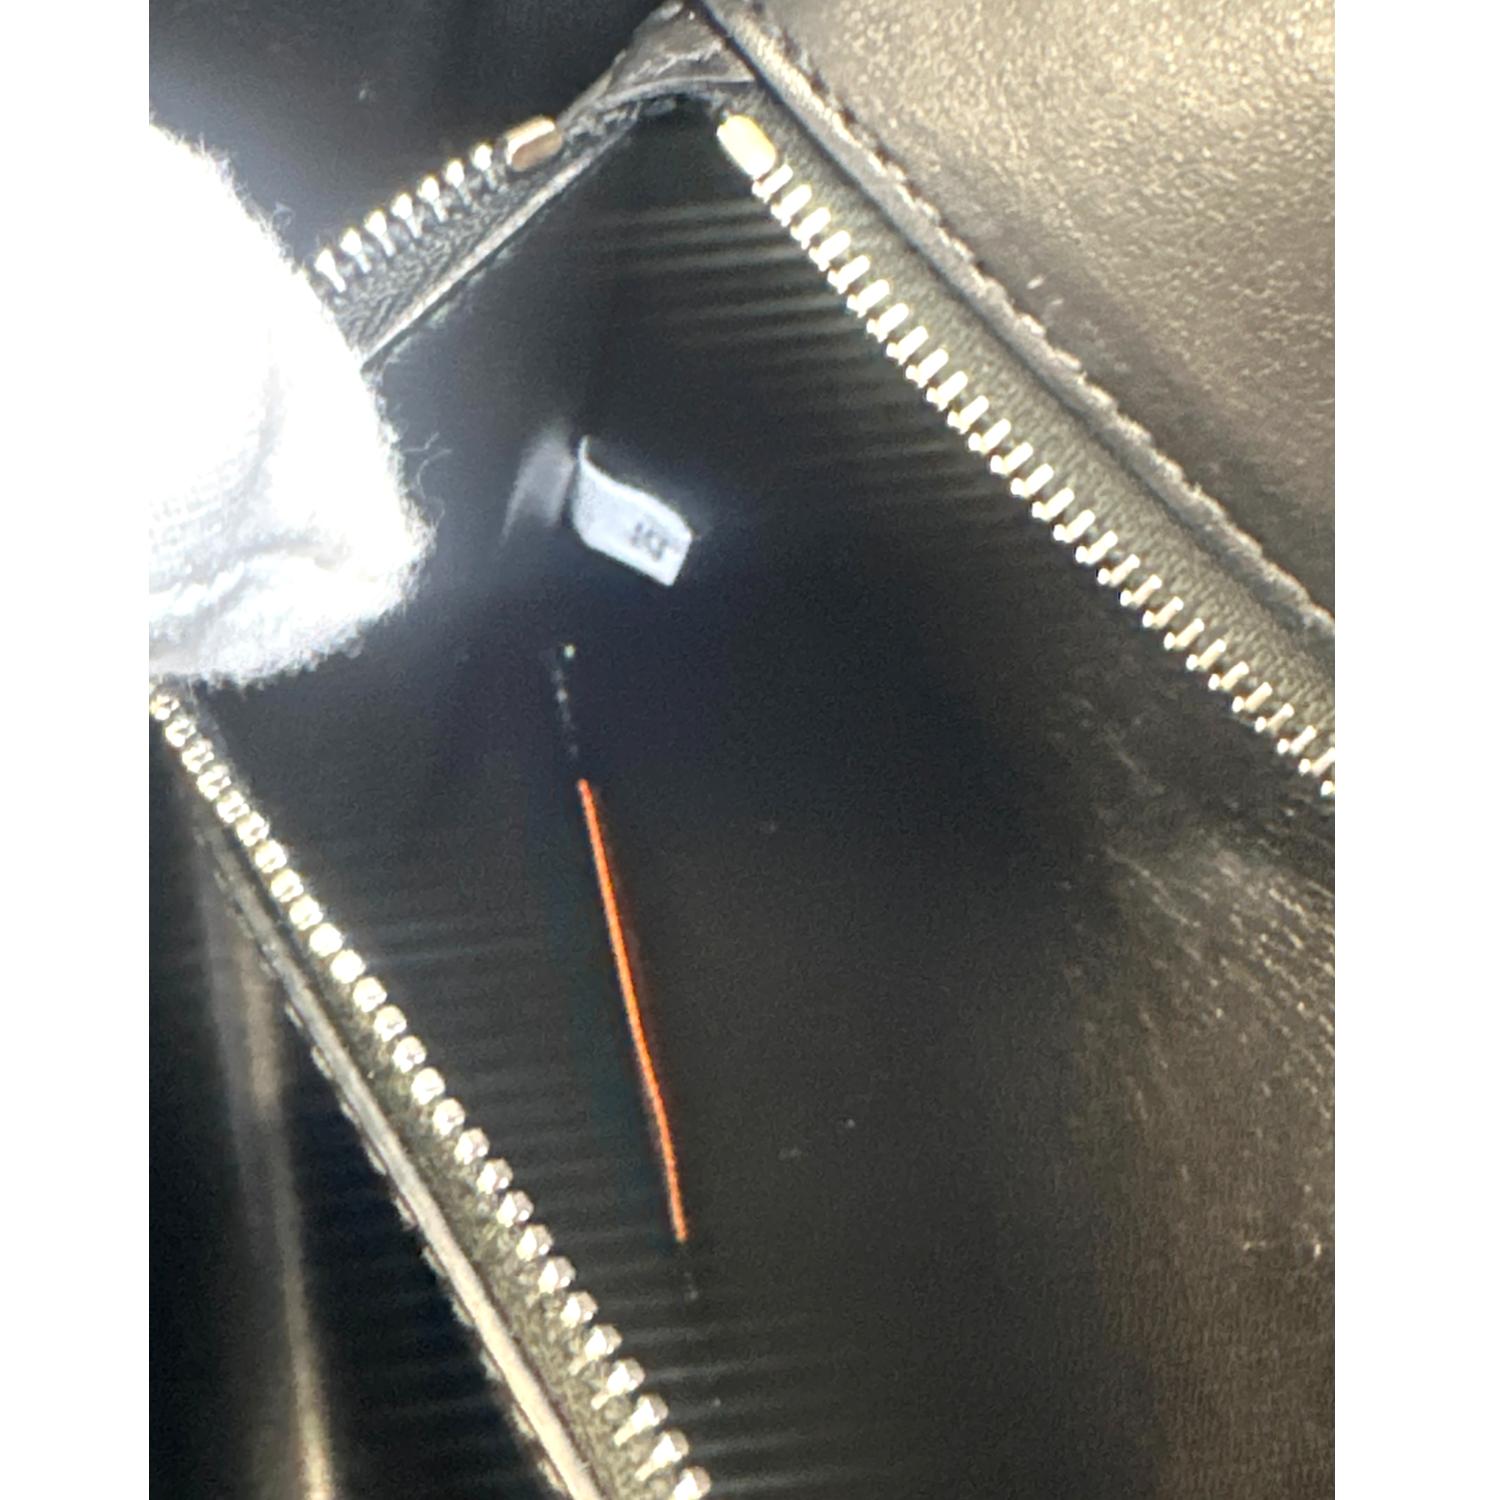 Elektra clutch bag Prada Black in Polyester - 21397131